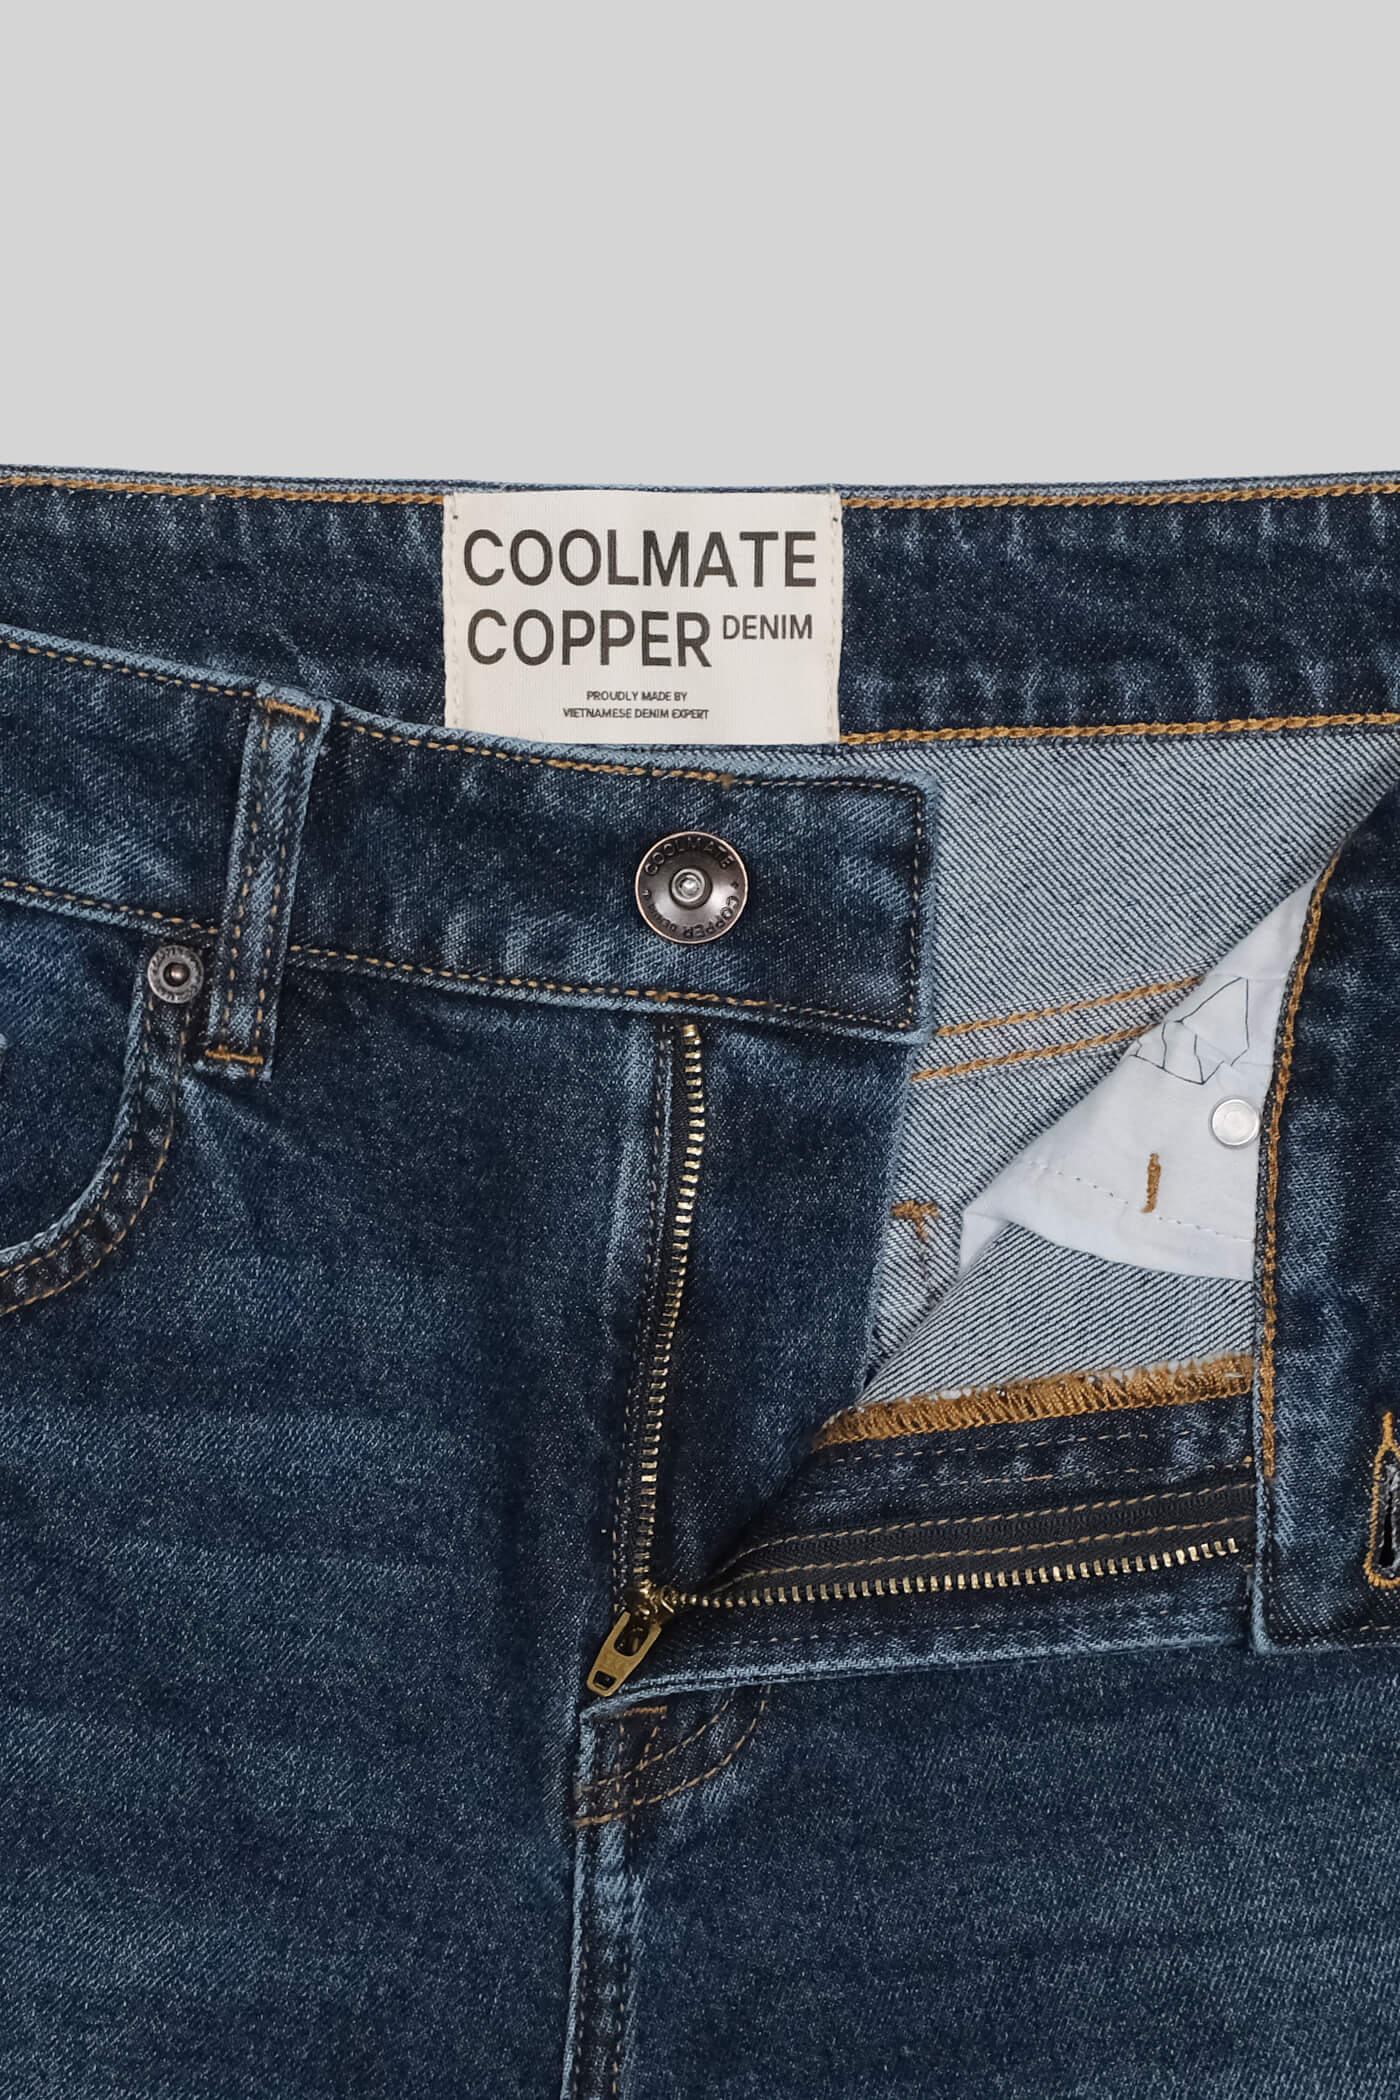 SĂN DEAL - Quần Jeans Nam Copper Denim Slim Fit  8